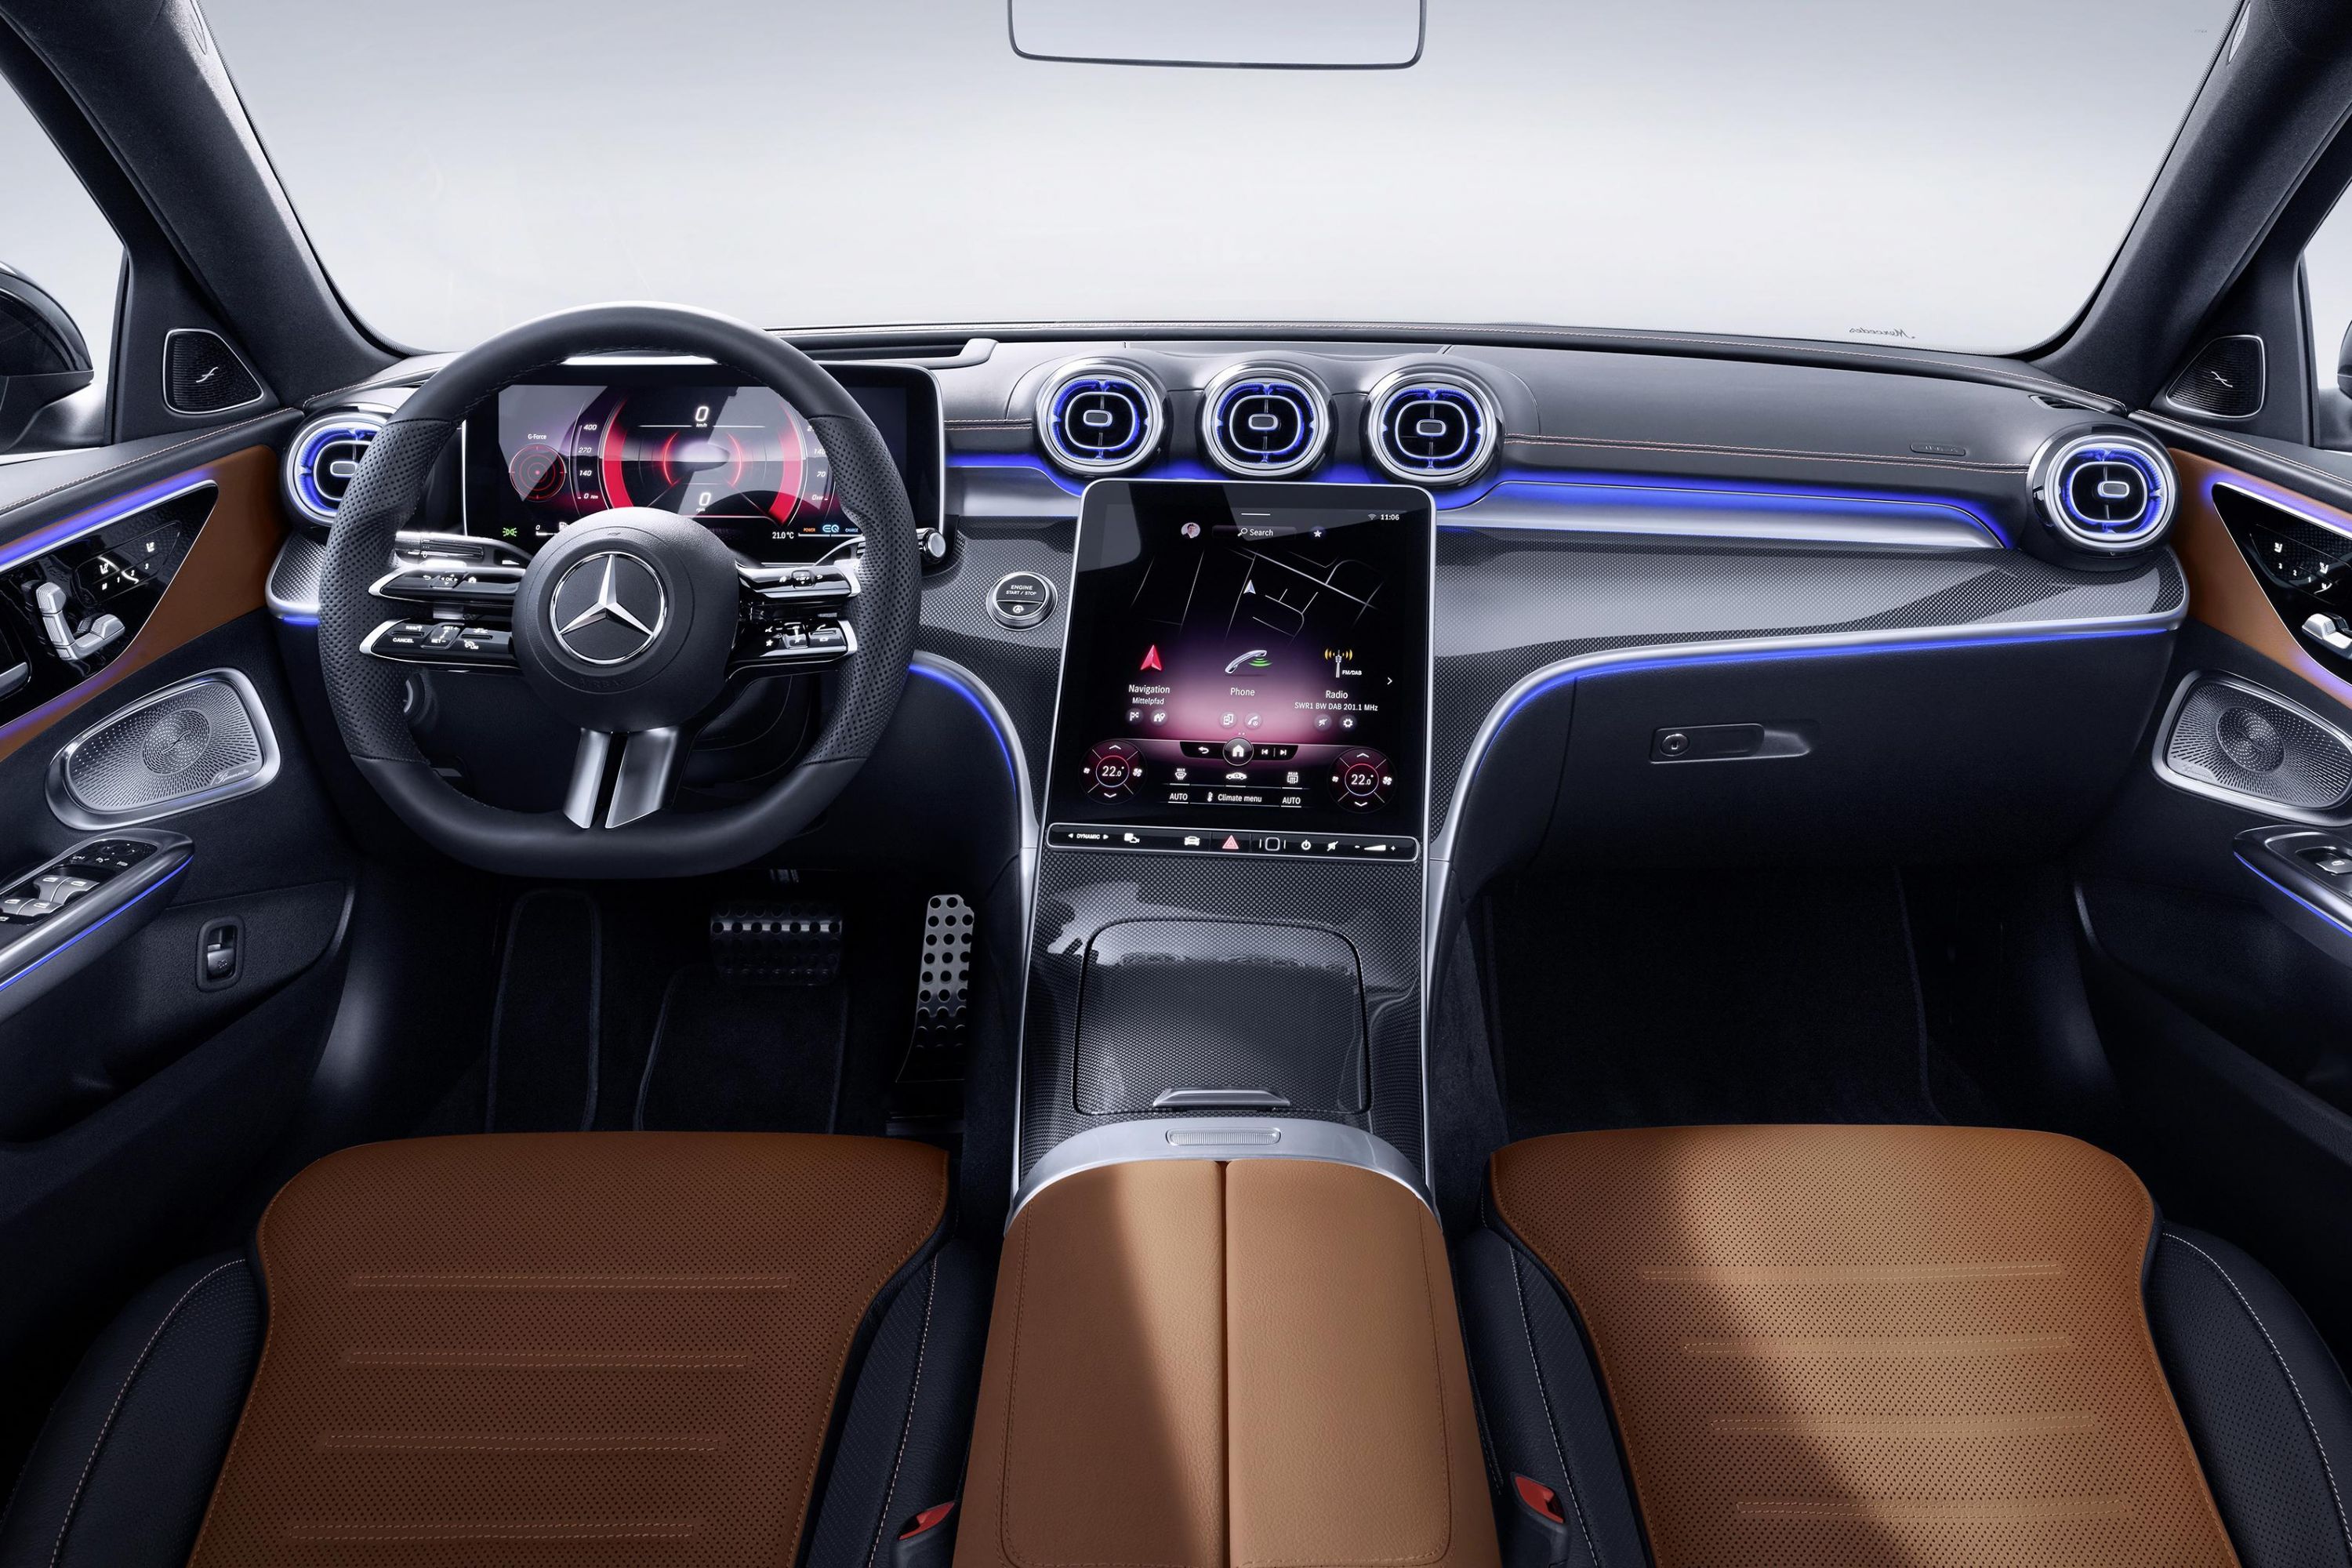 Mercedes-Benz GLC 200 interior - Cockpit